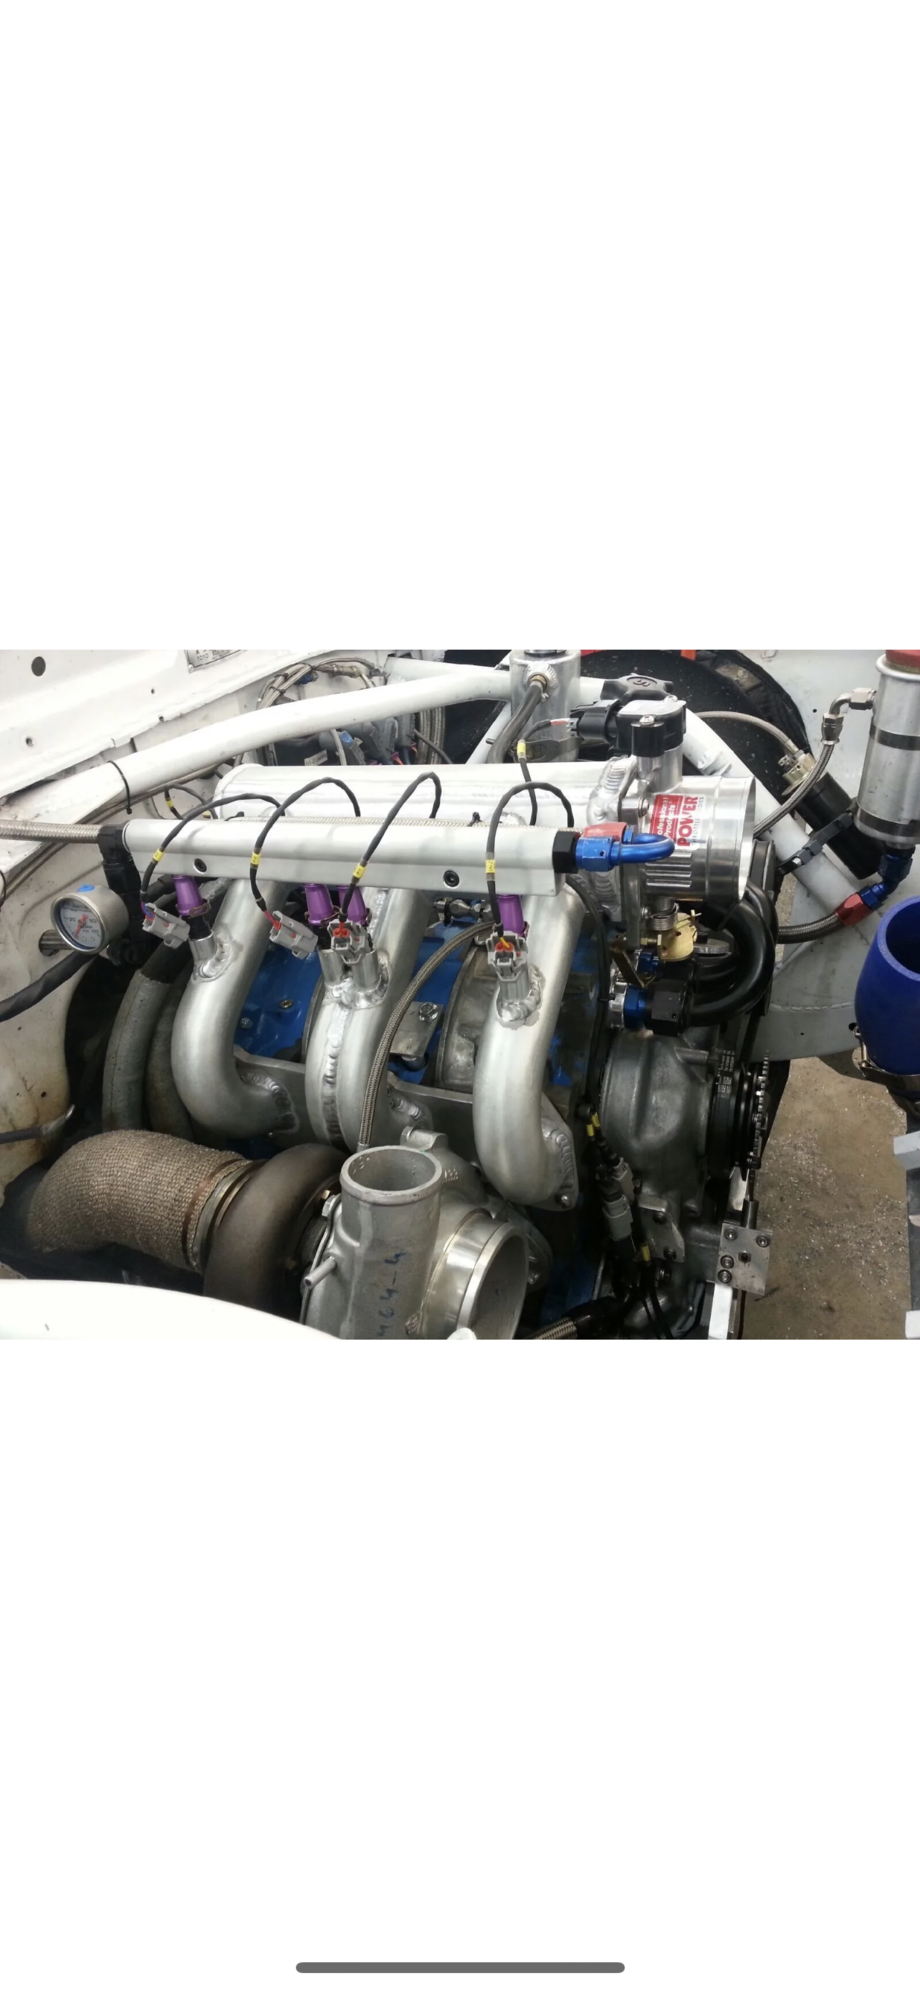 Engine - Intake/Fuel - Custom 13b-rew Intake Manifold - Used - 0  All Models - Albertville, MN 55301, United States